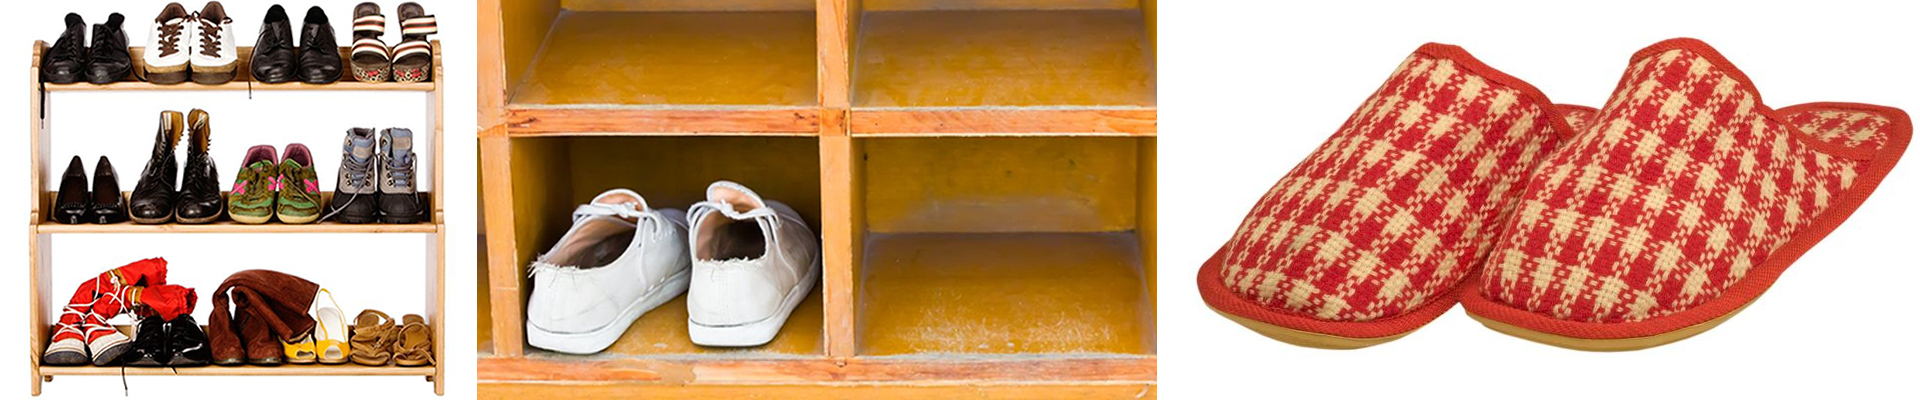 Shoe Cabinets | Shoe Storage Cabinets & Shoe Racks